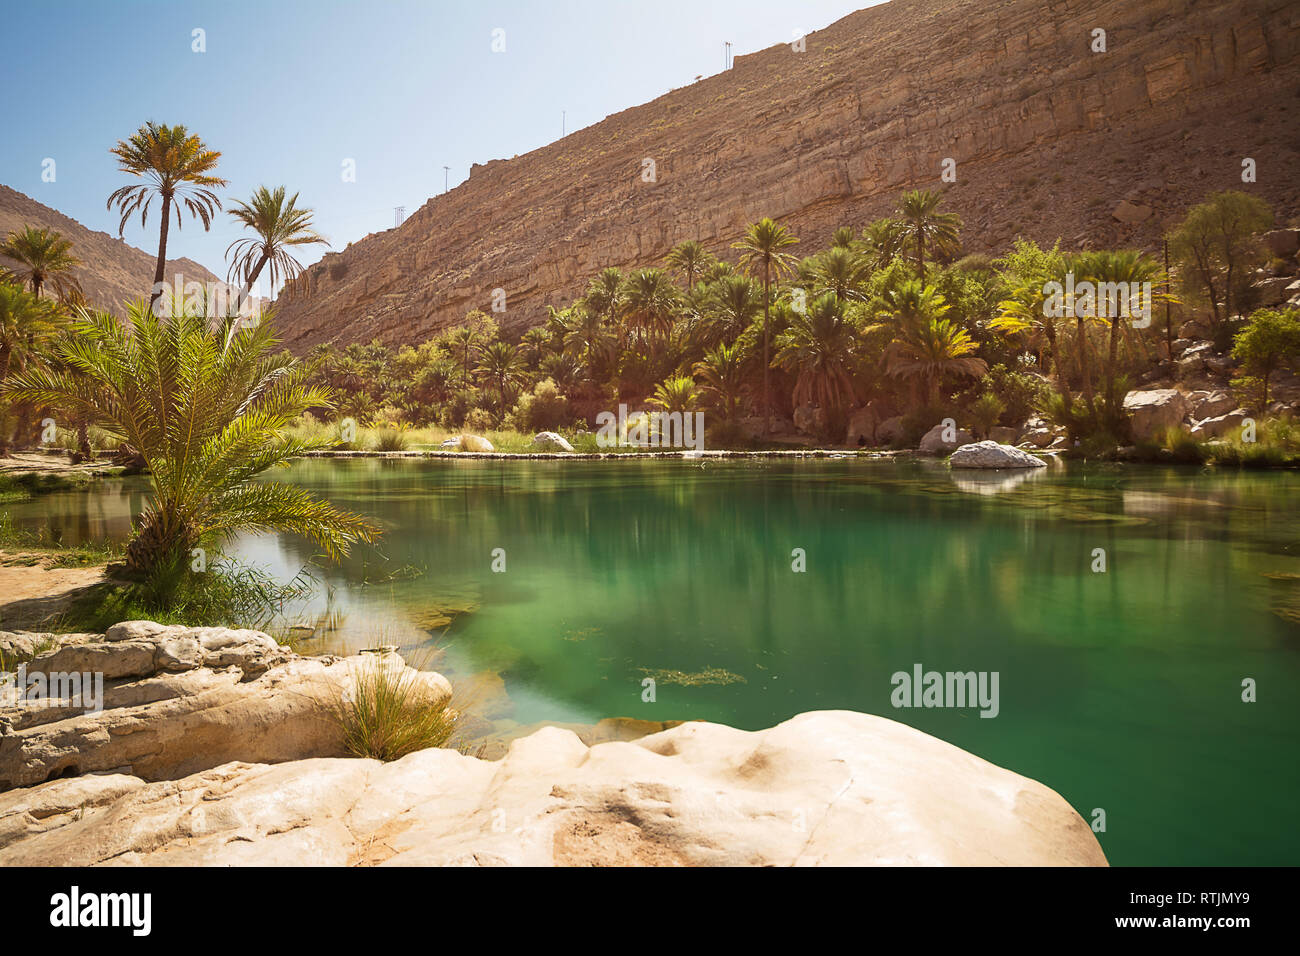 Amazing Lake and oasis with palm trees (Wadi Bani Khalid) in the Omani desert Stock Photo